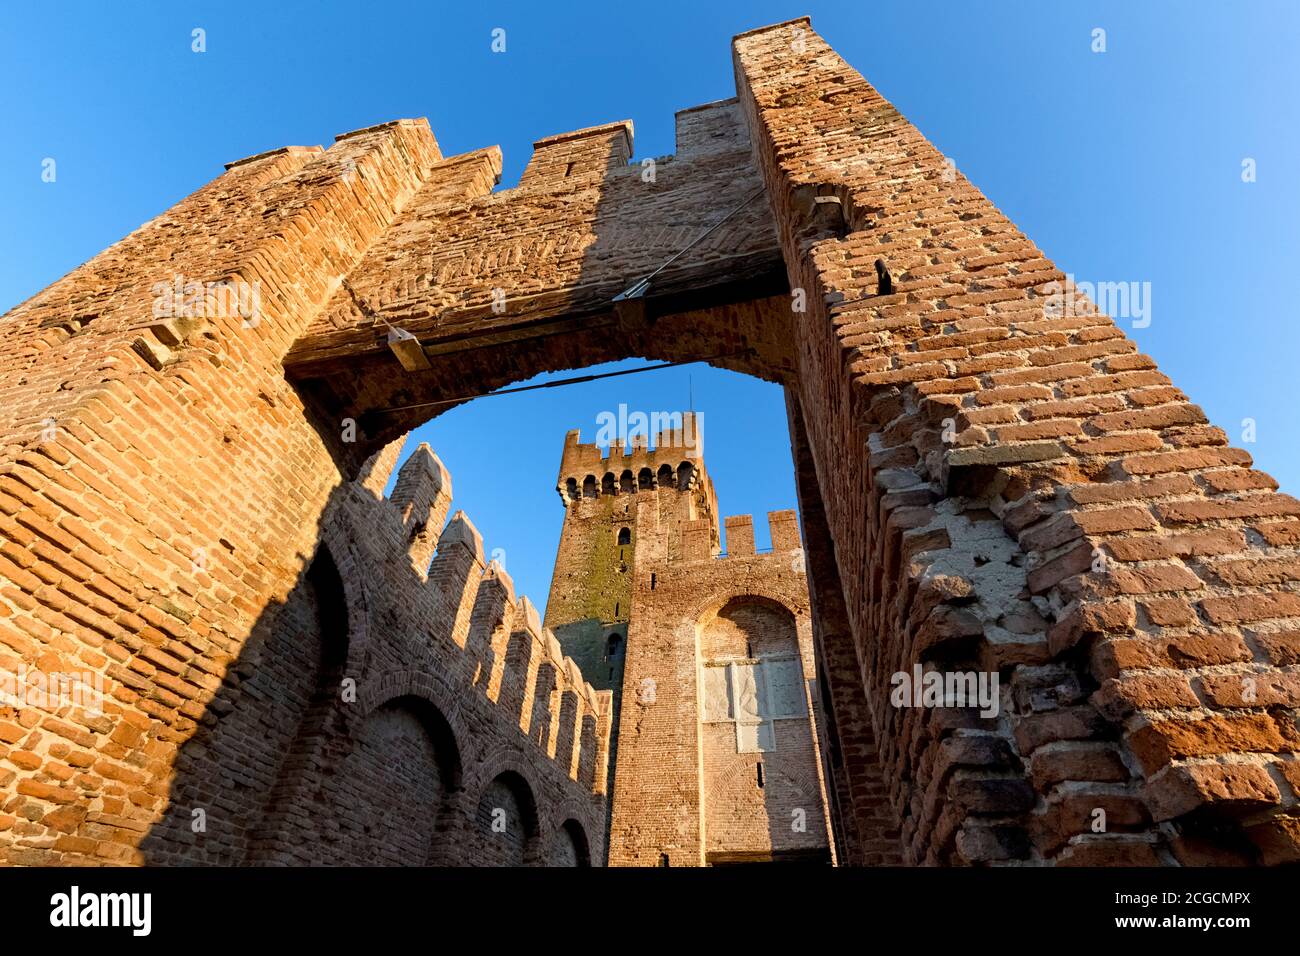 The medieval entrance portal of the Rocca degli Alberi in Montagnana. Padova province, Veneto, Italy, Europe. Stock Photo